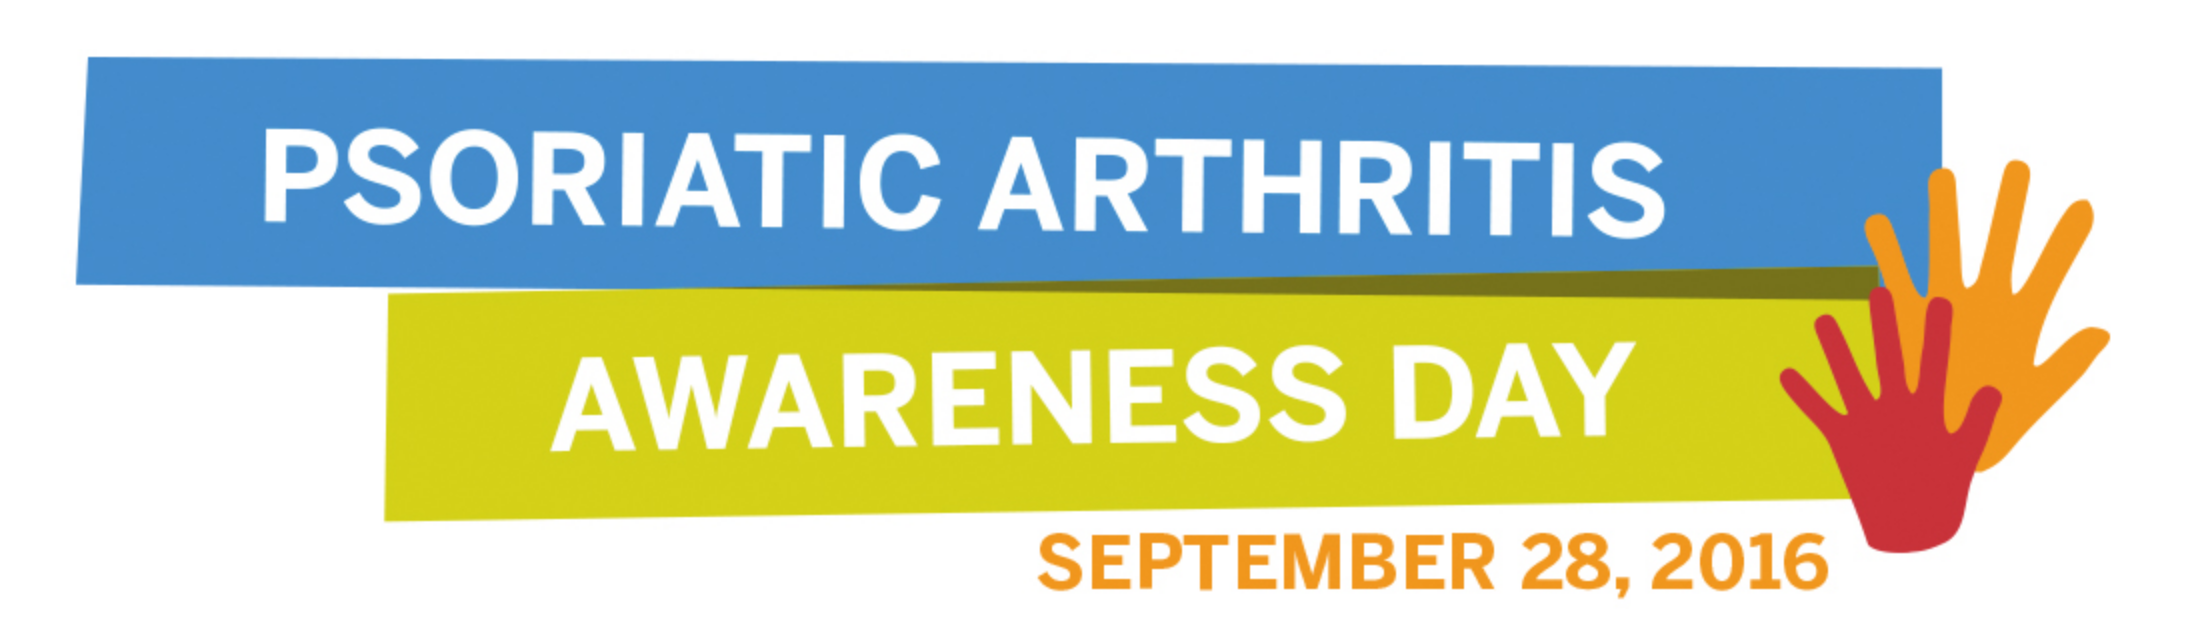 Psoriatic Arthritis Awareness Day September 28, 2016